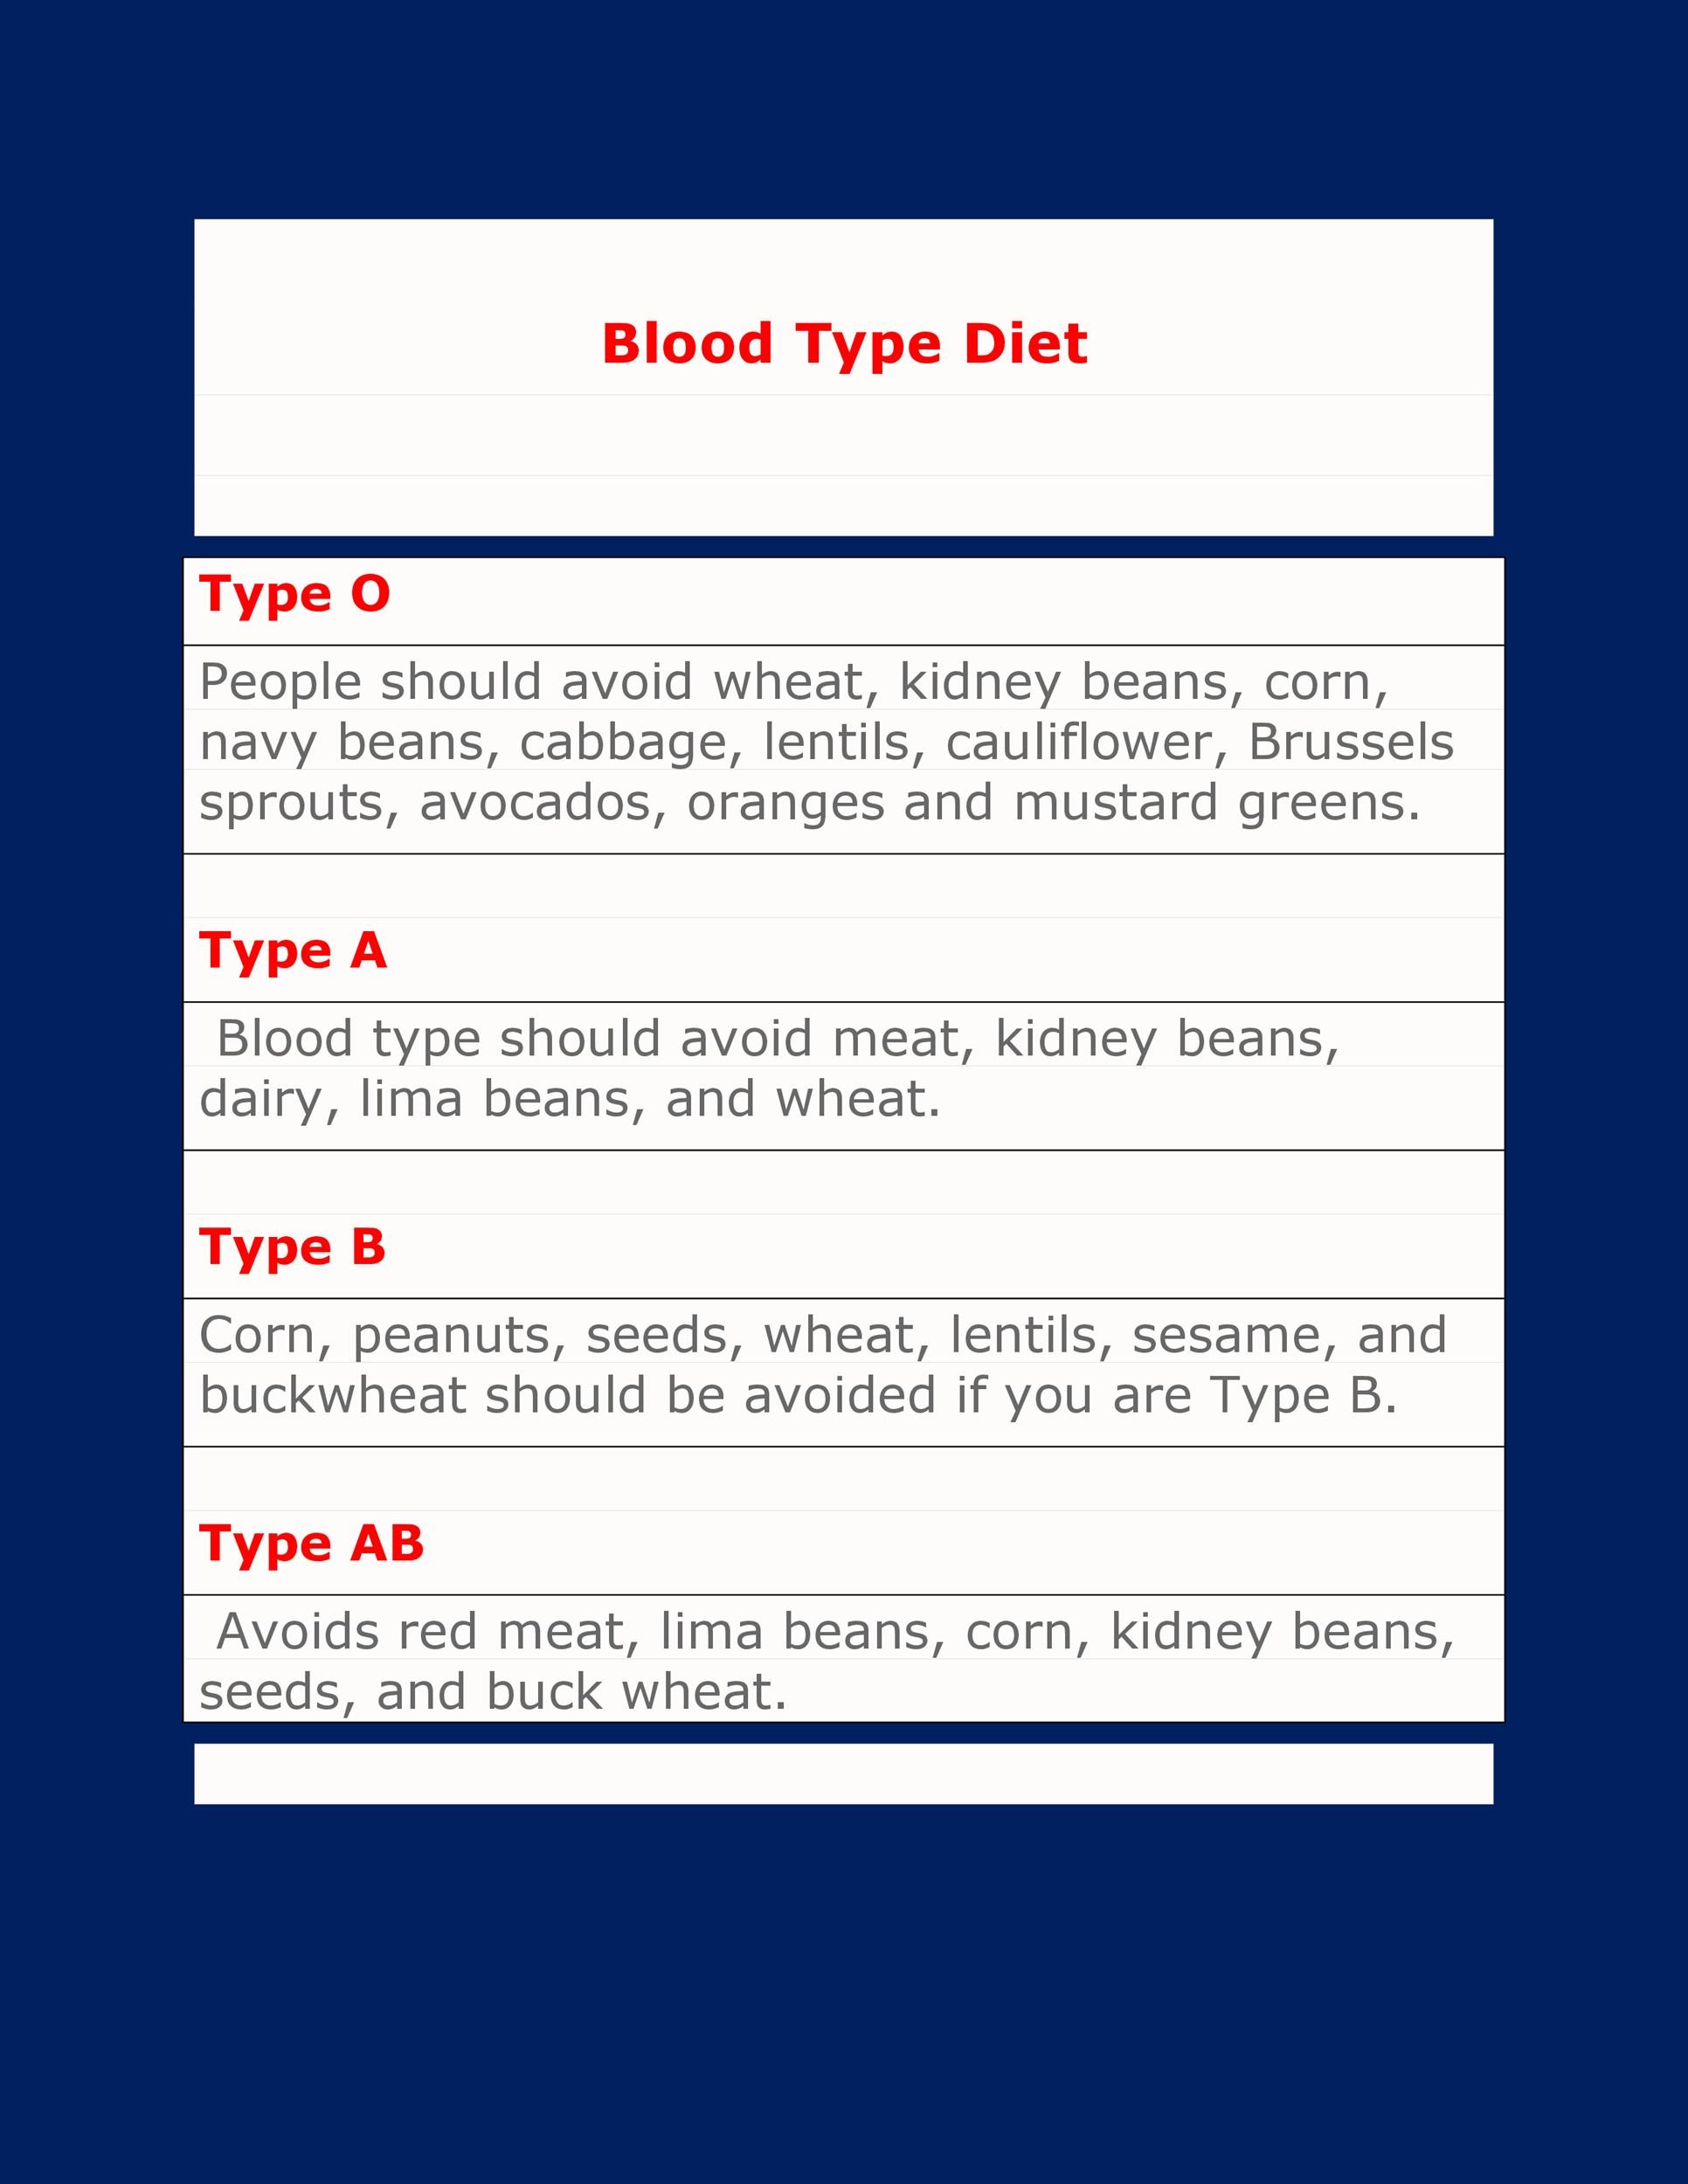 At Blood Type Diet